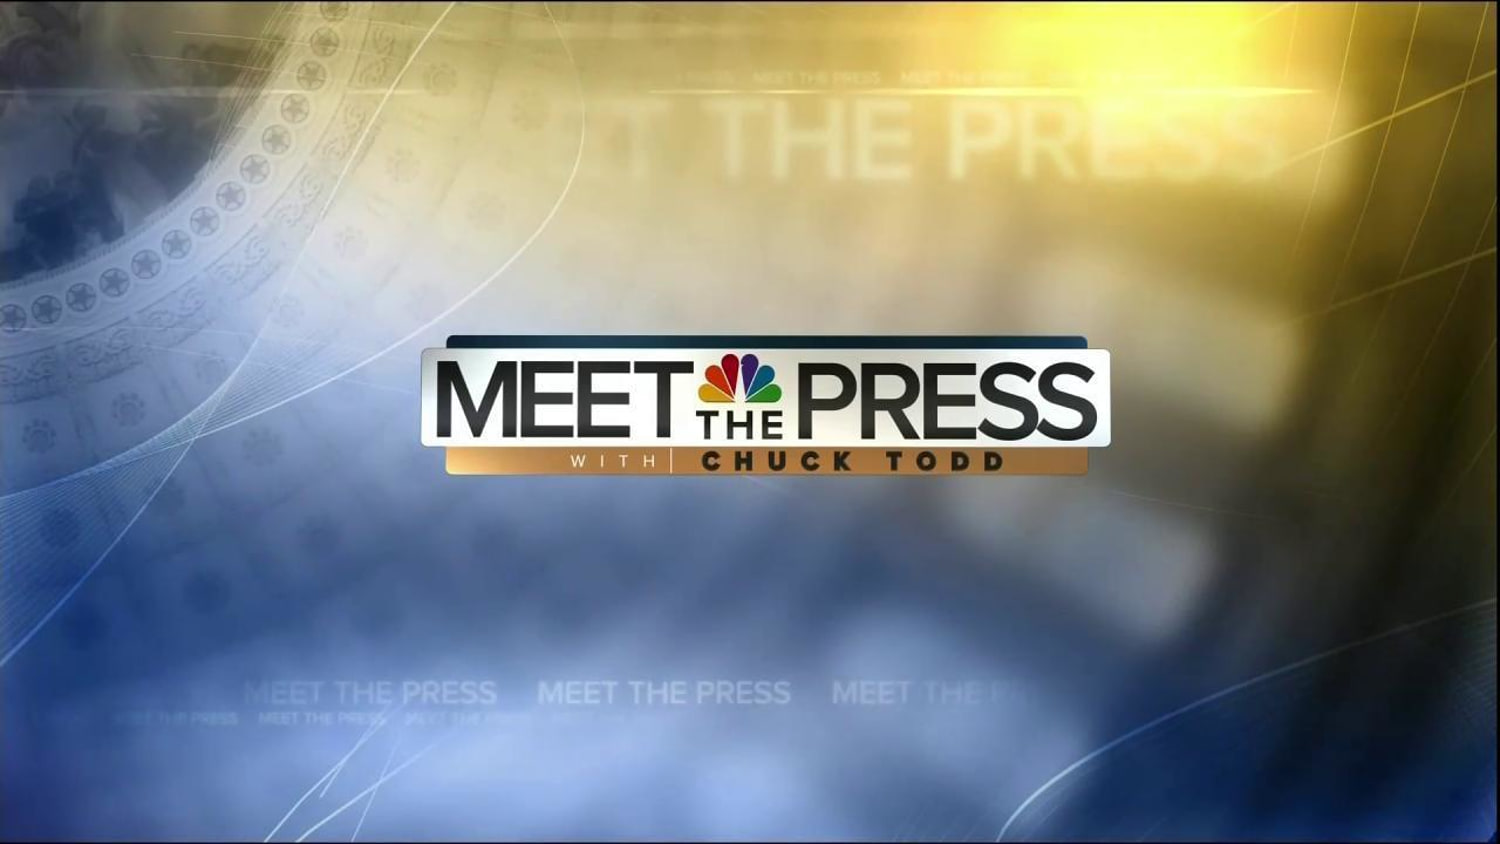 Snaps Mtp Still About Meet The Press On Nbc News A Net Backup Yz Jpg